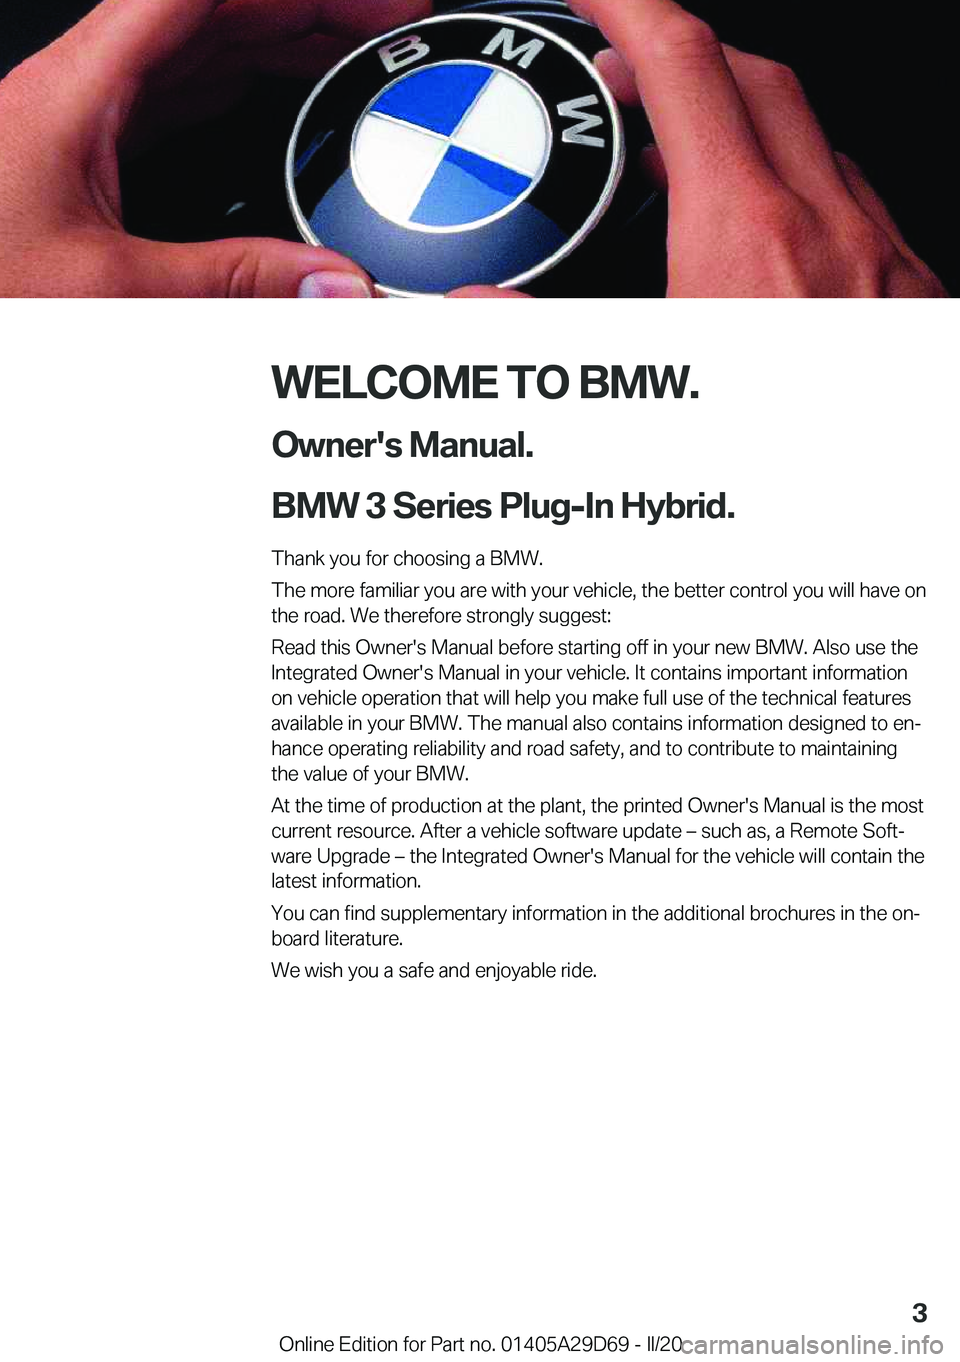 BMW 3 SERIES SEDAN PLUG-IN HYBRID 2021  Owners Manual �W�E�L�C�O�M�E��T�O��B�M�W�.
�O�w�n�e�r�'�s��M�a�n�u�a�l�.
�B�M�W��3��S�e�r�i�e�s��P�l�u�g�-�I�n��H�y�b�r�i�d�.
�T�h�a�n�k��y�o�u��f�o�r��c�h�o�o�s�i�n�g��a��B�M�W�.
�T�h�e��m�o�r�e�